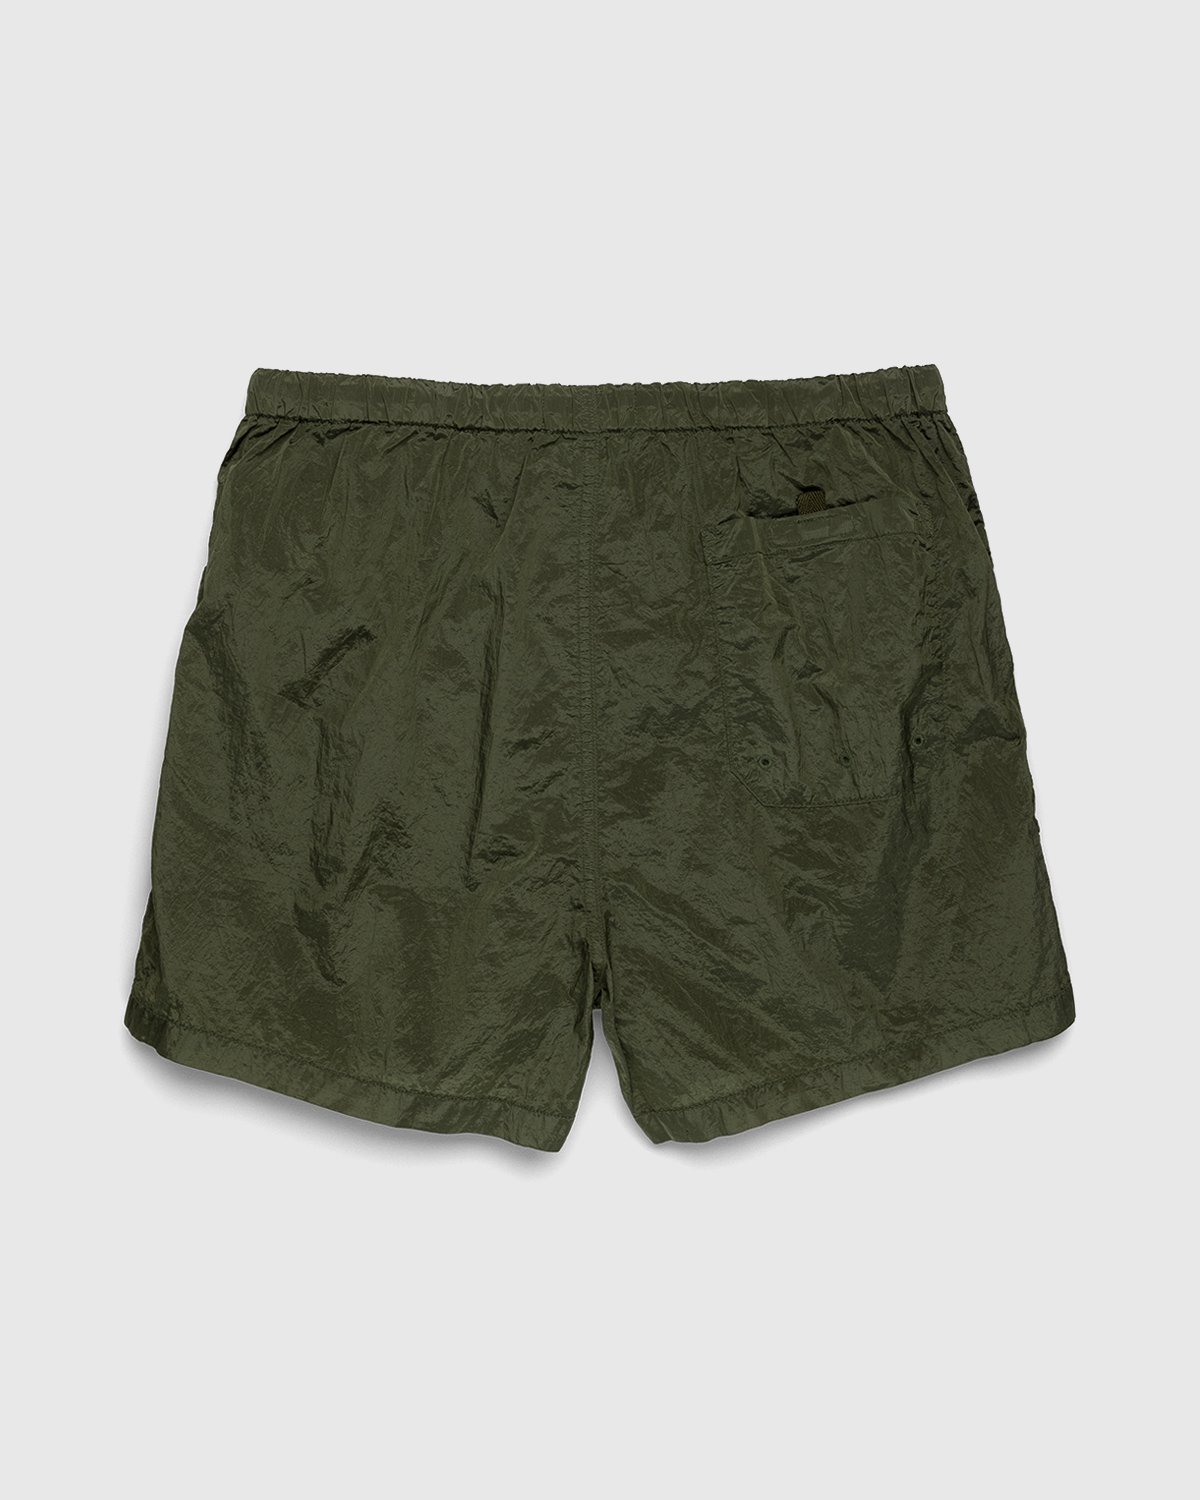 Stone Island - B0643 Nylon Metal Bermuda Shorts Olive - Clothing - Green - Image 2